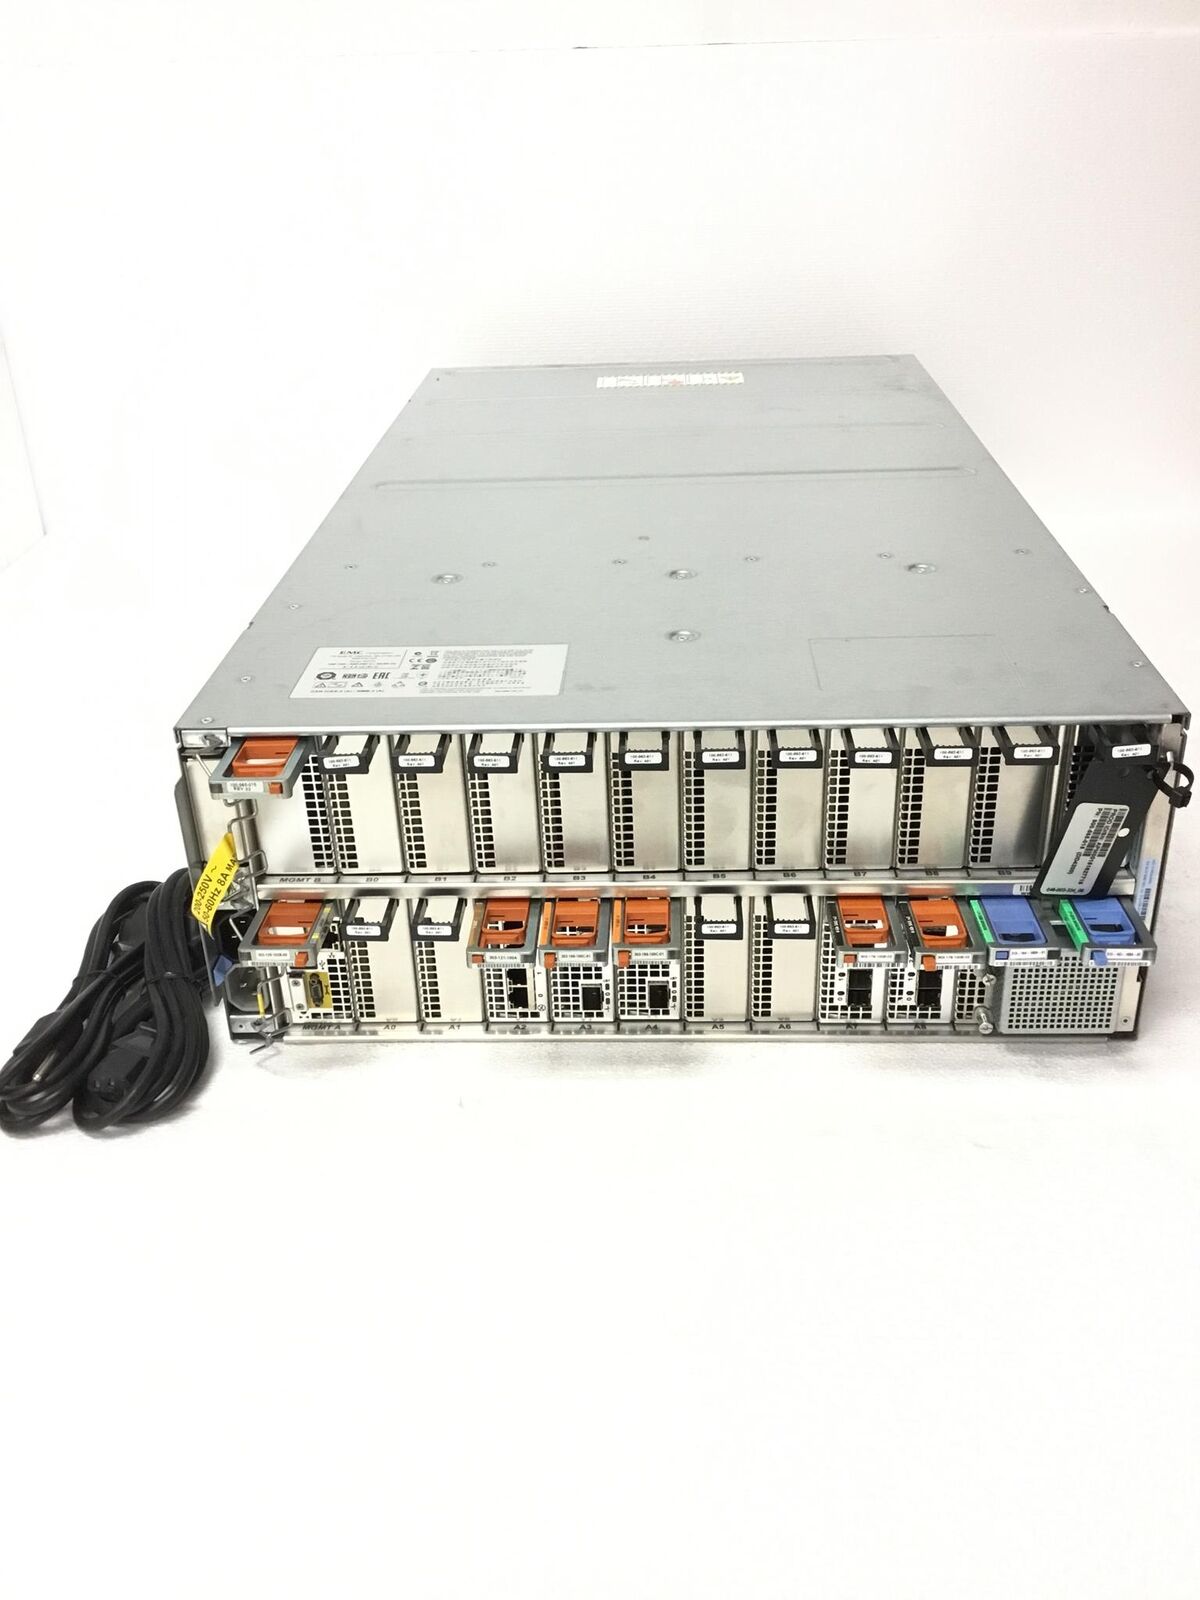 EMC MGTN Hard drive Storage System with EMC Blanks 100-563-611 and Modules